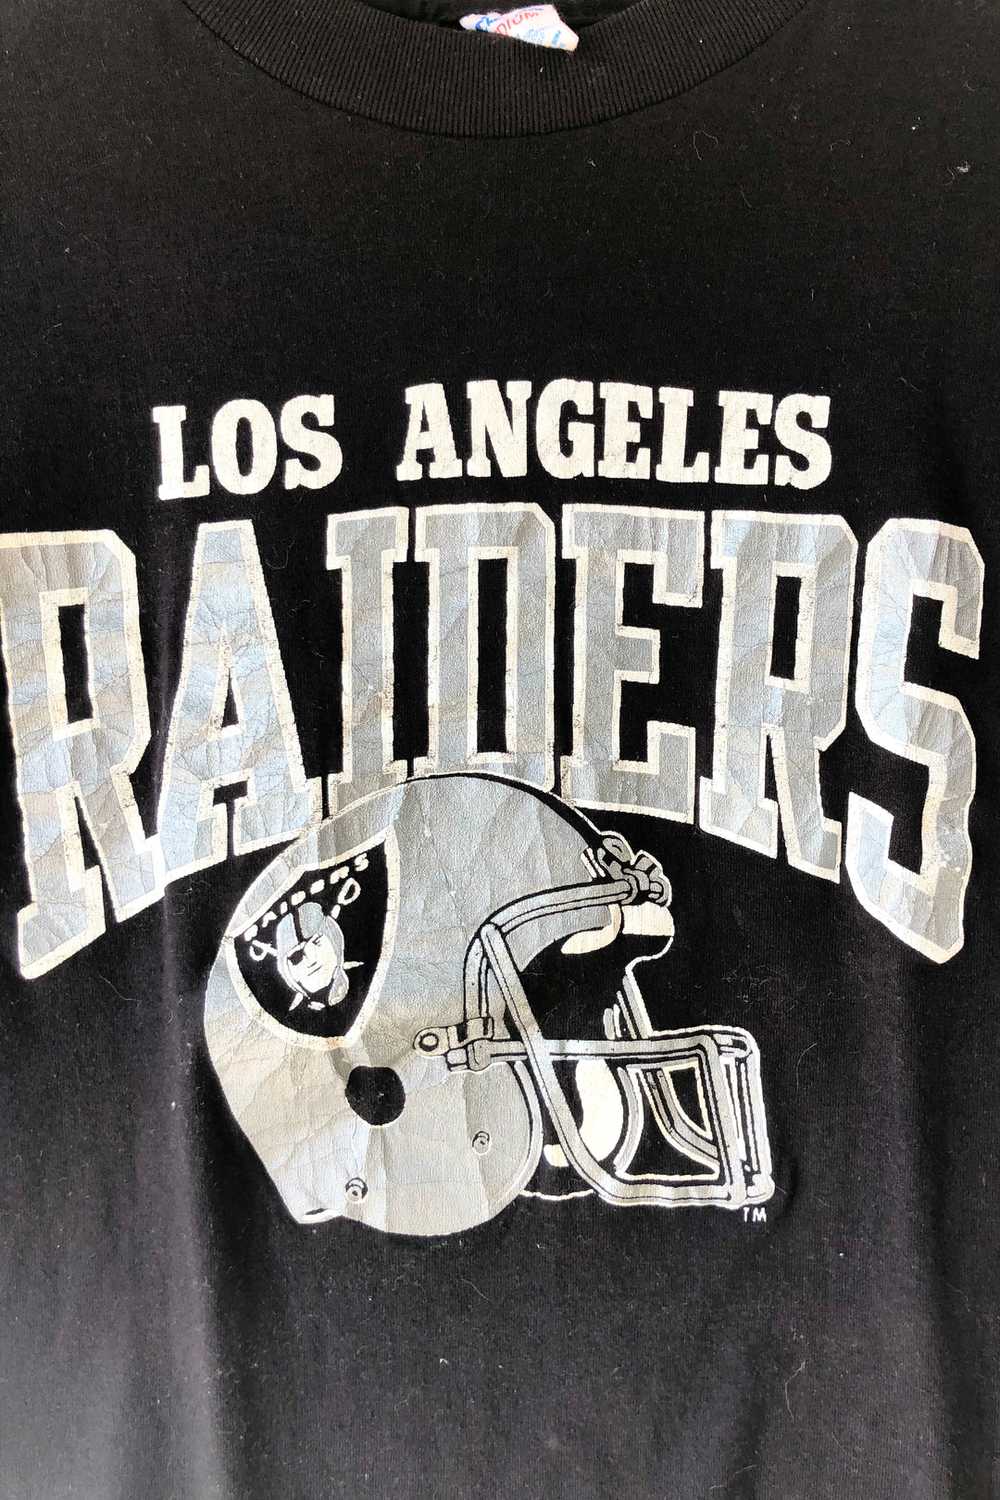 Oakland Raiders Warriors Athletics MASH UP logo shirt S - 5XL!!!